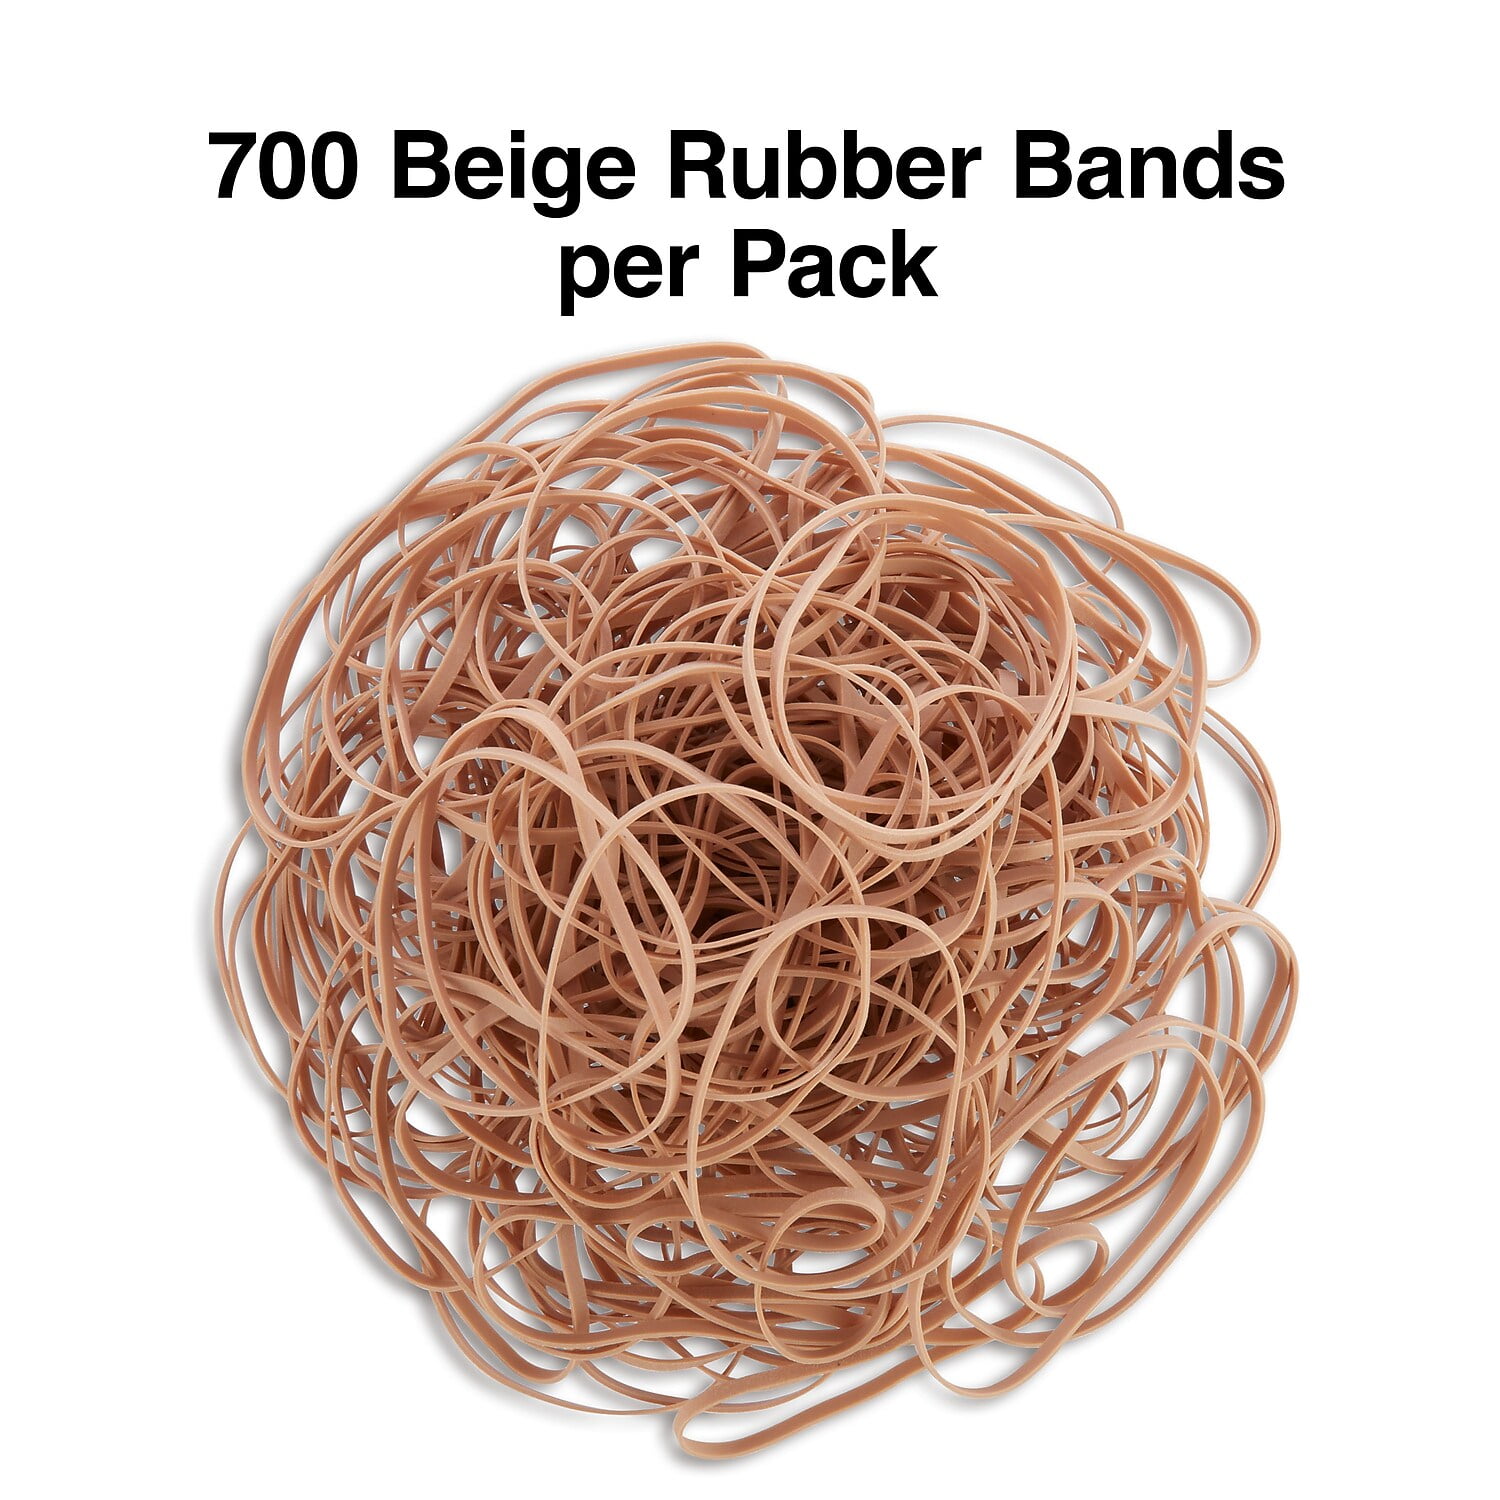 PlasticMill Rubber Bands - #33 Size - White Rubberbands - 1LB/500 Count